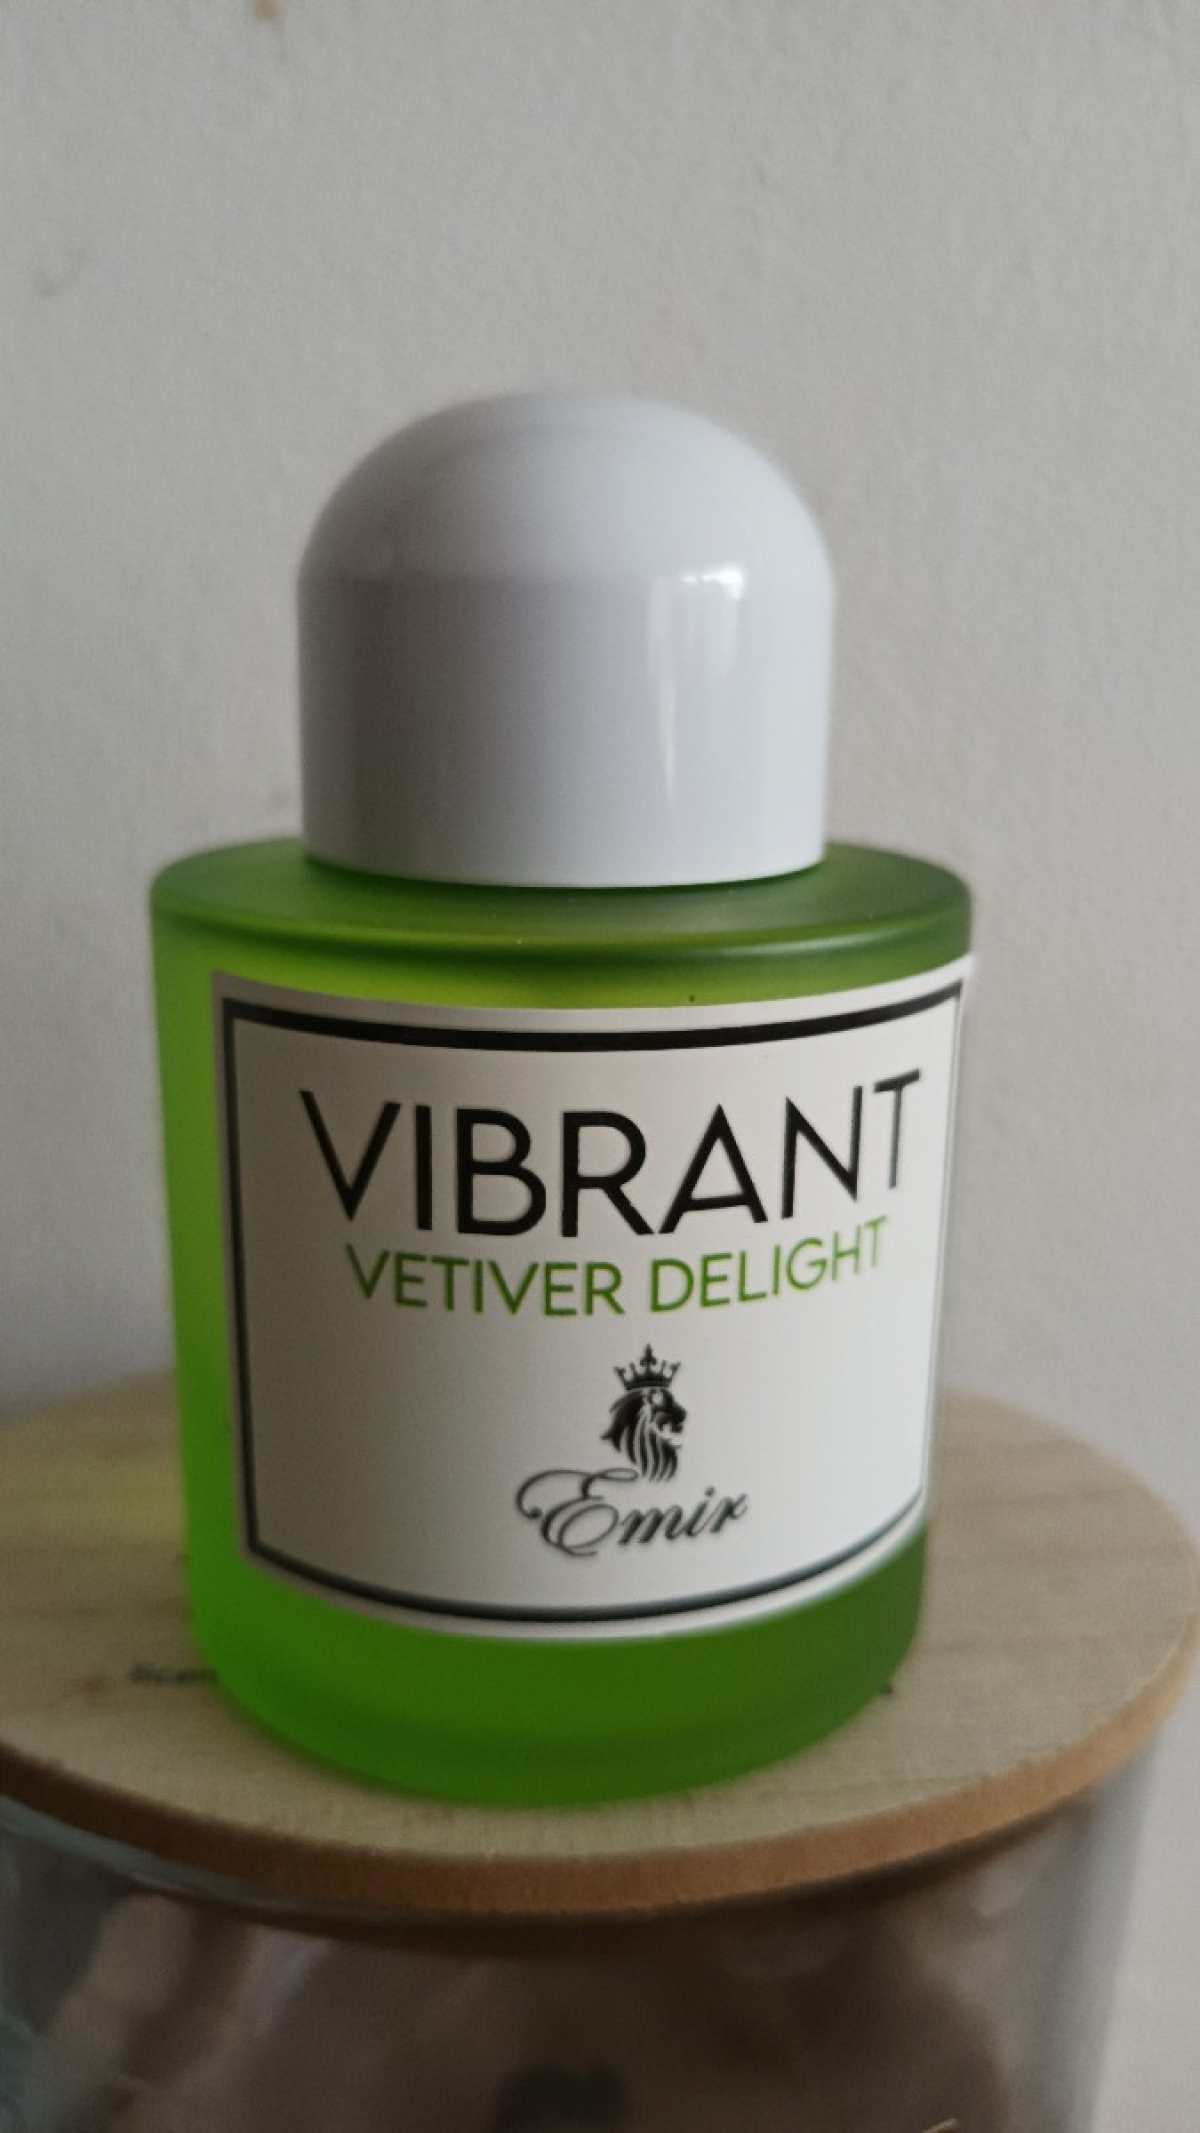 Paris Corner Emir Vibrant Vetiver Delight spray 2 ml